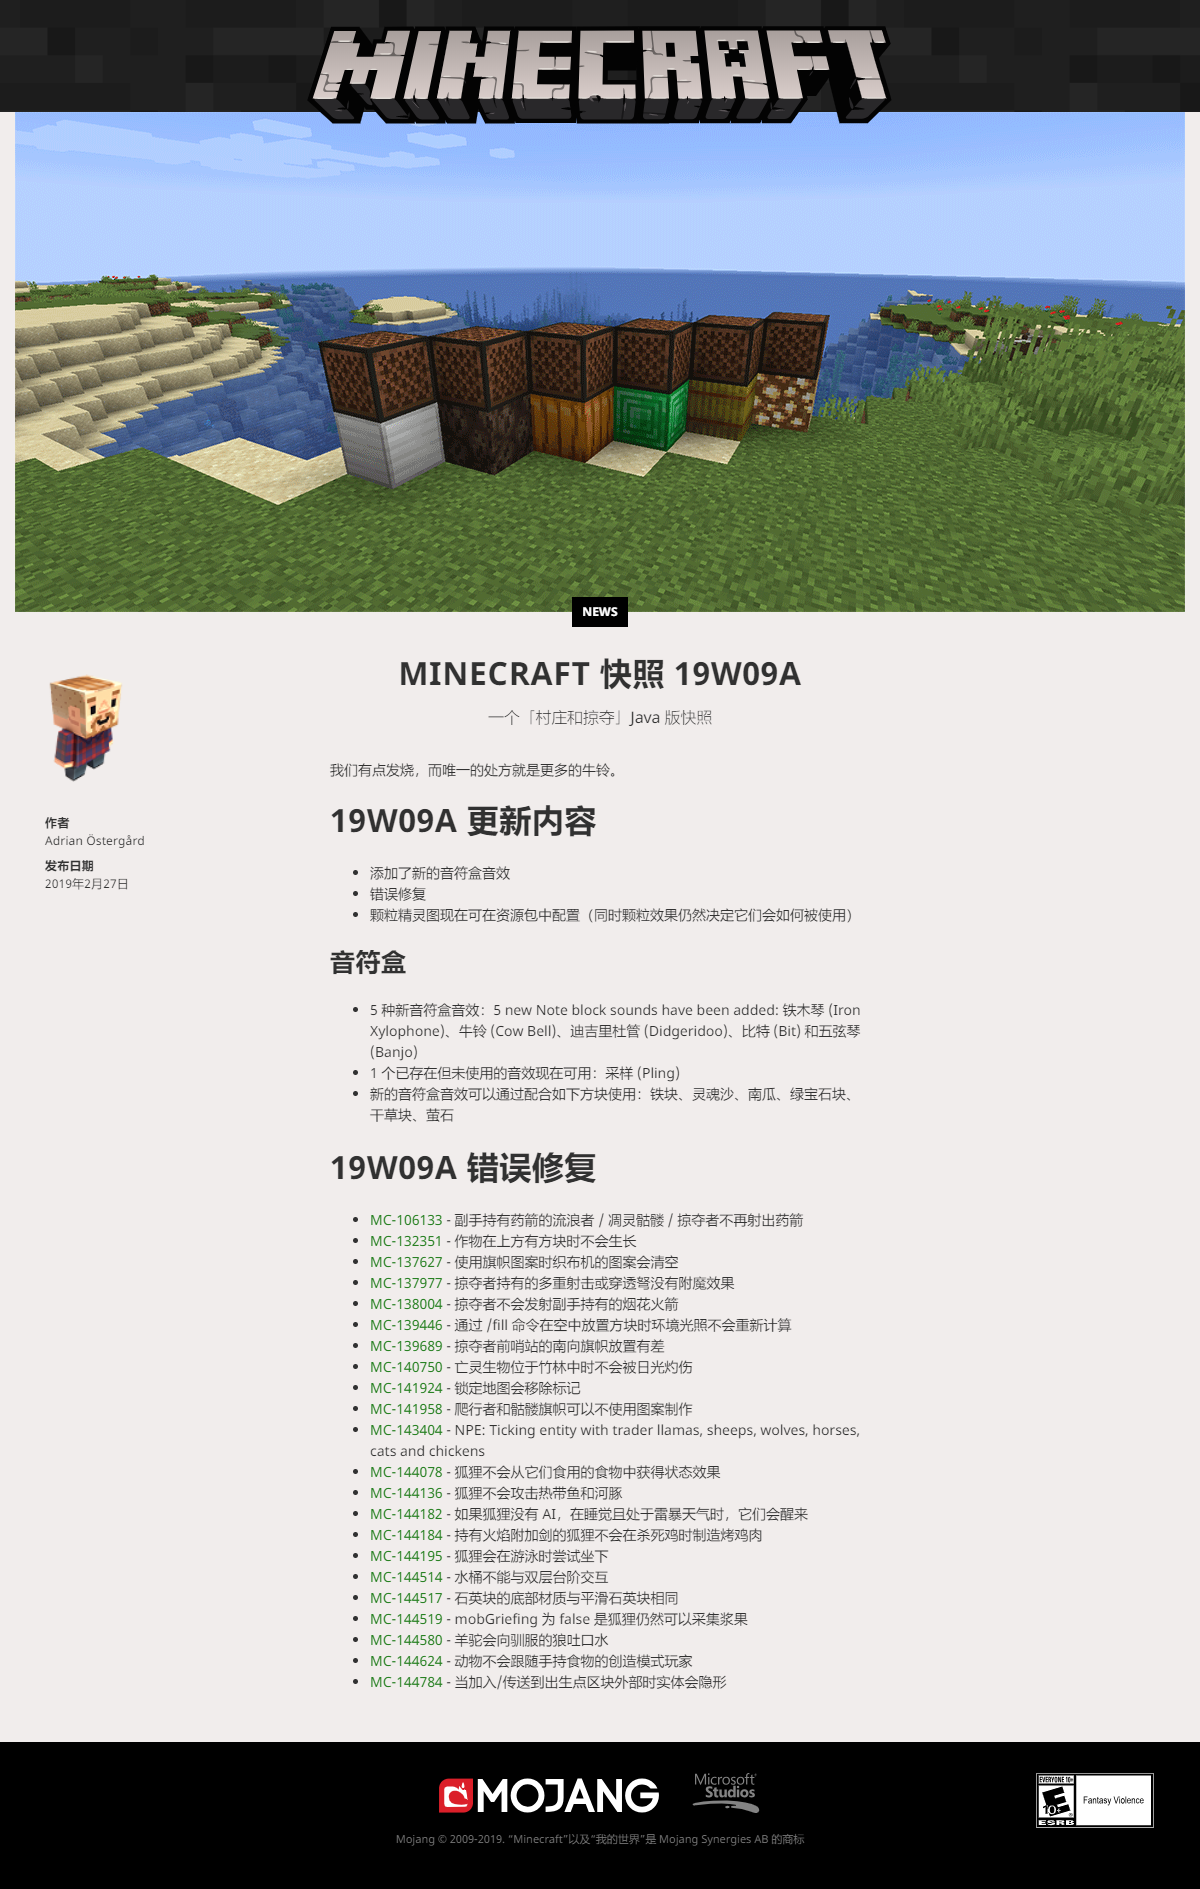 Minecraft 1 14 19w09a 快照说明 汉化版 新音符盒音效 毛玉线圈物语社区